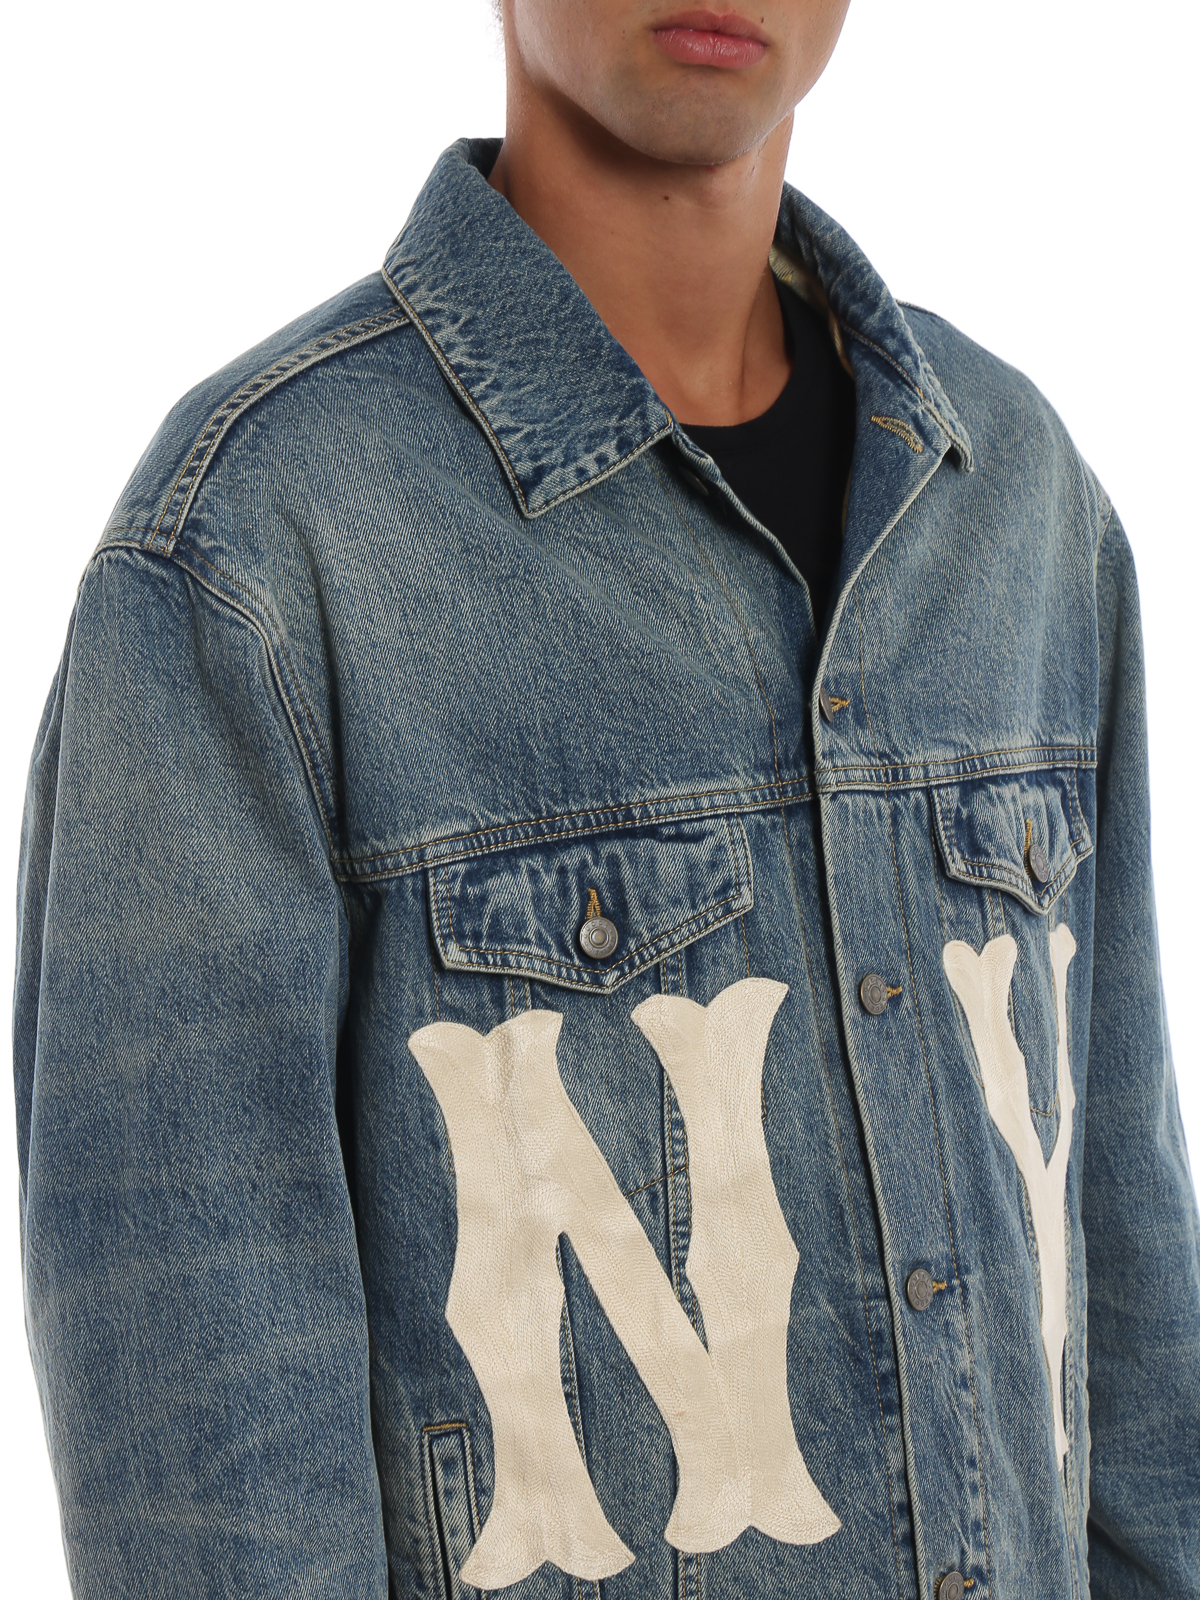 new york yankees gucci jacket